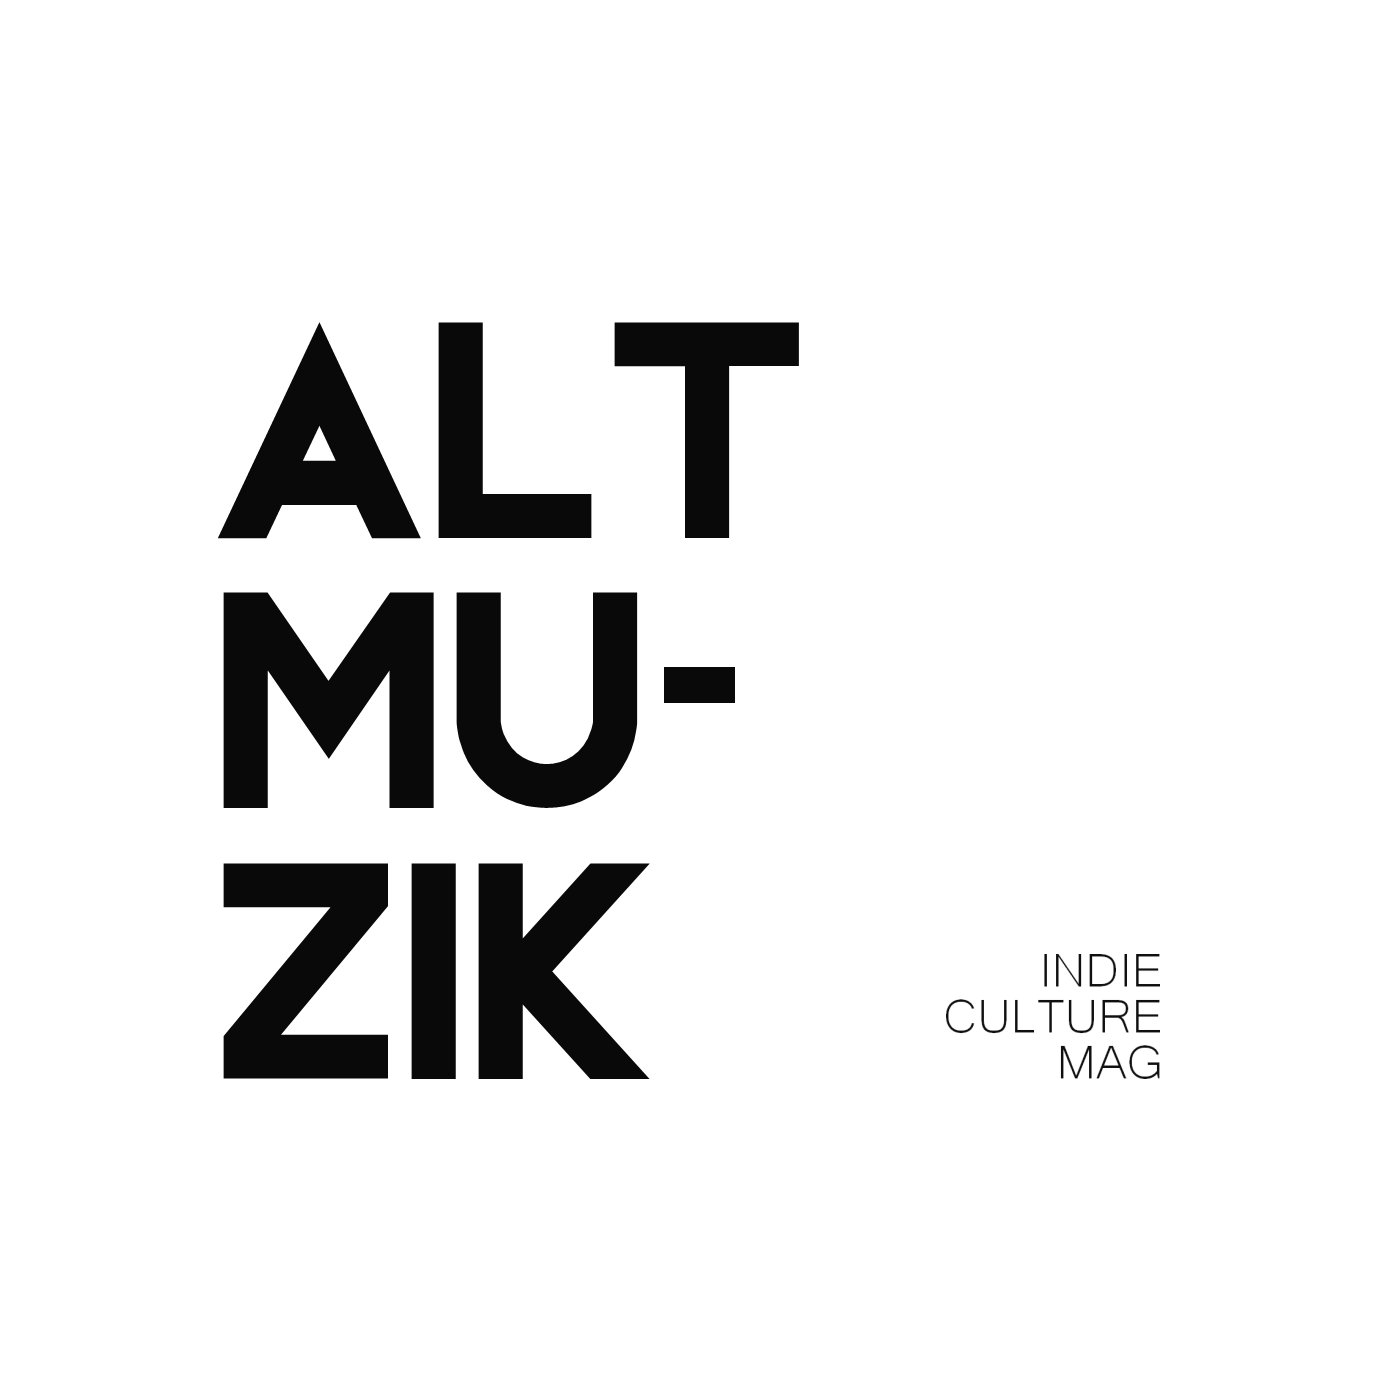 indie culture mag from turkey
// alternatif müzik ve kültür mecmuası  
editor@altmuzik.com